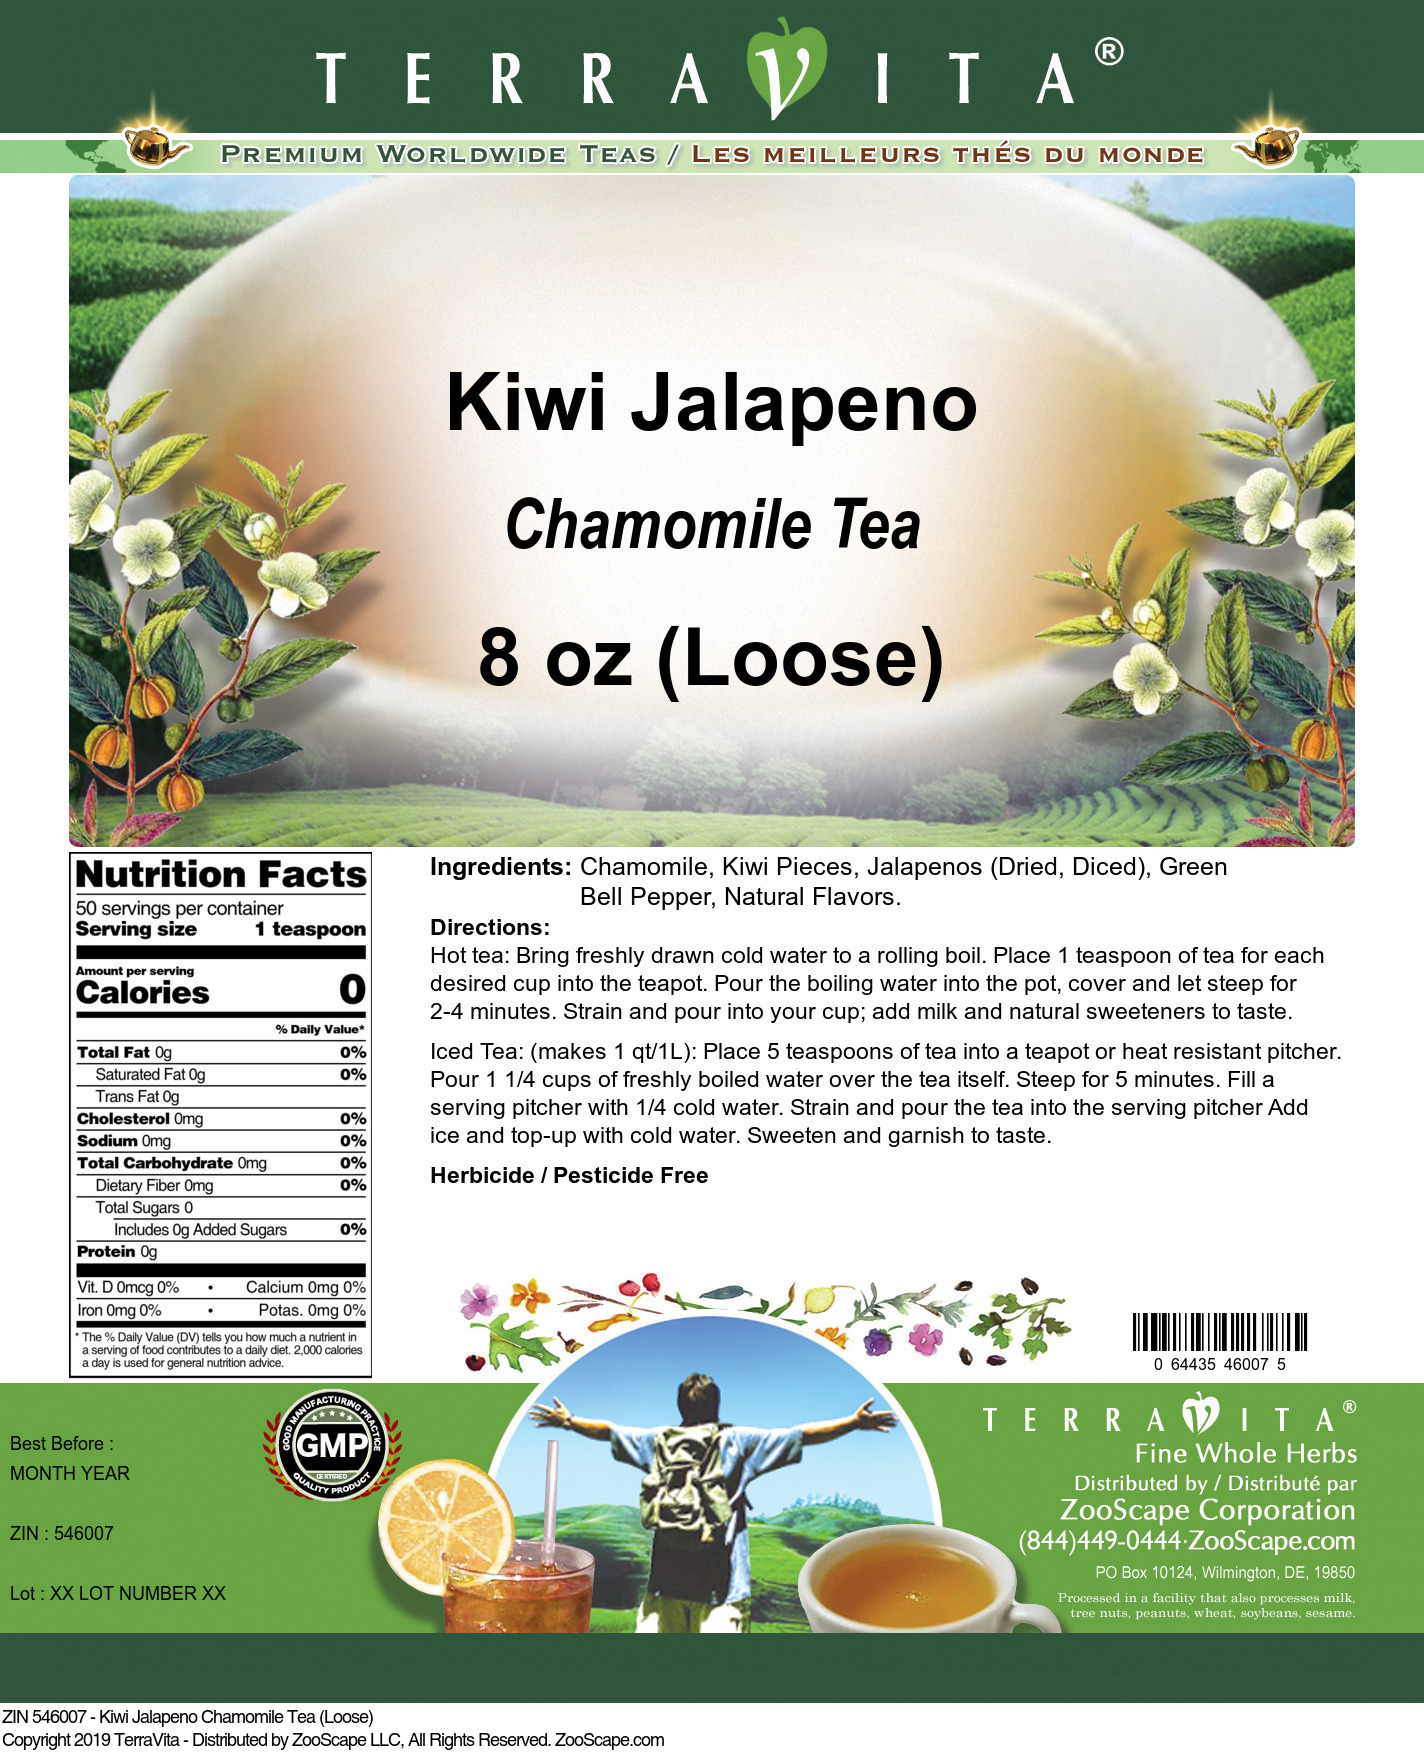 Kiwi Jalapeno Chamomile Tea (Loose) - Label